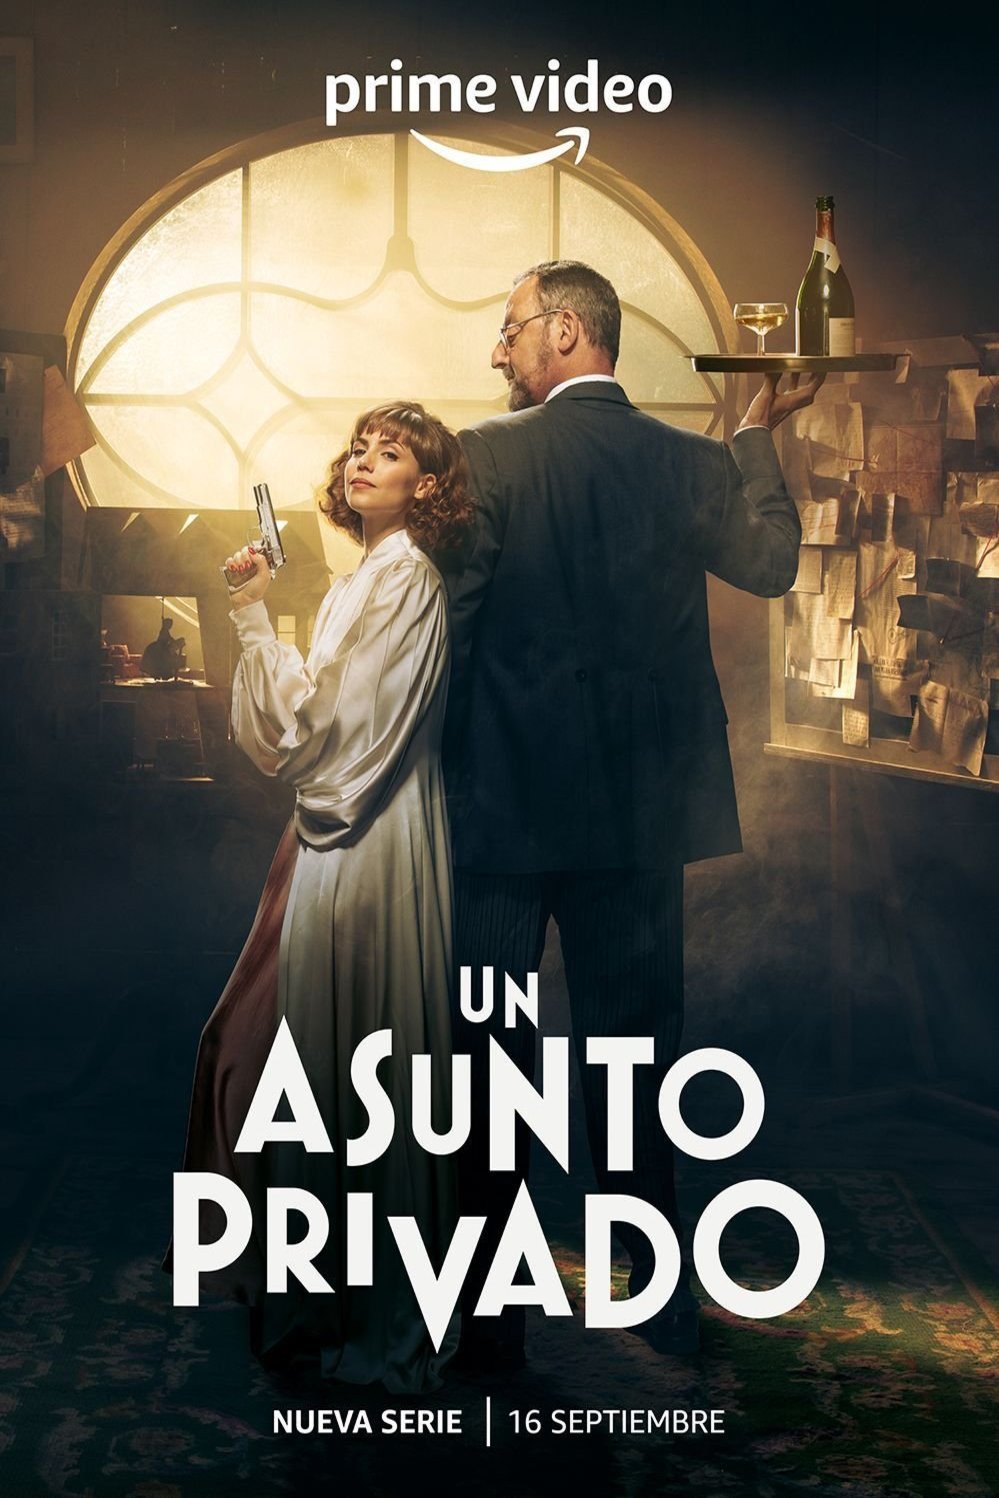 Spanish poster of the movie Un asunto privado